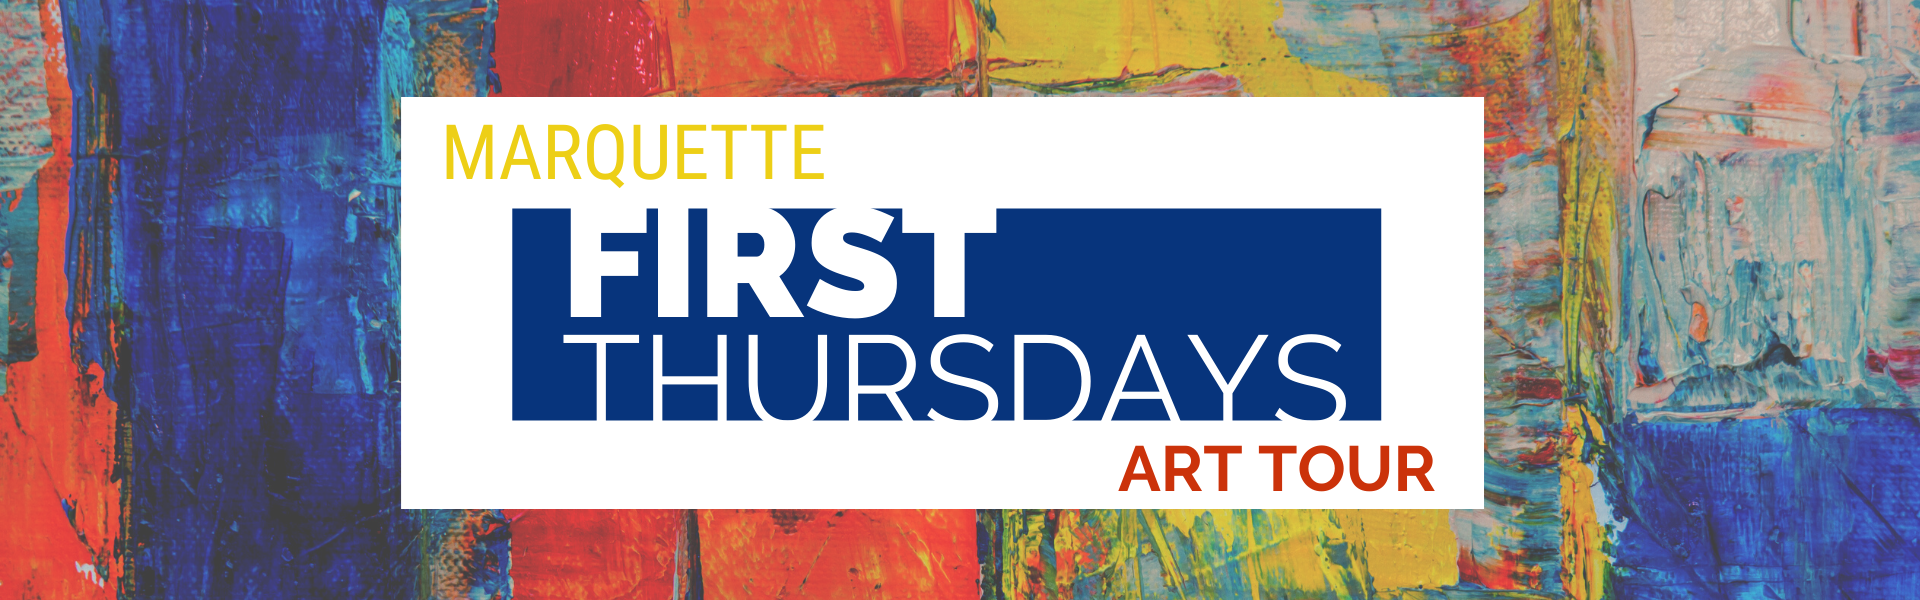 Marquette First Thursdays Art Tour